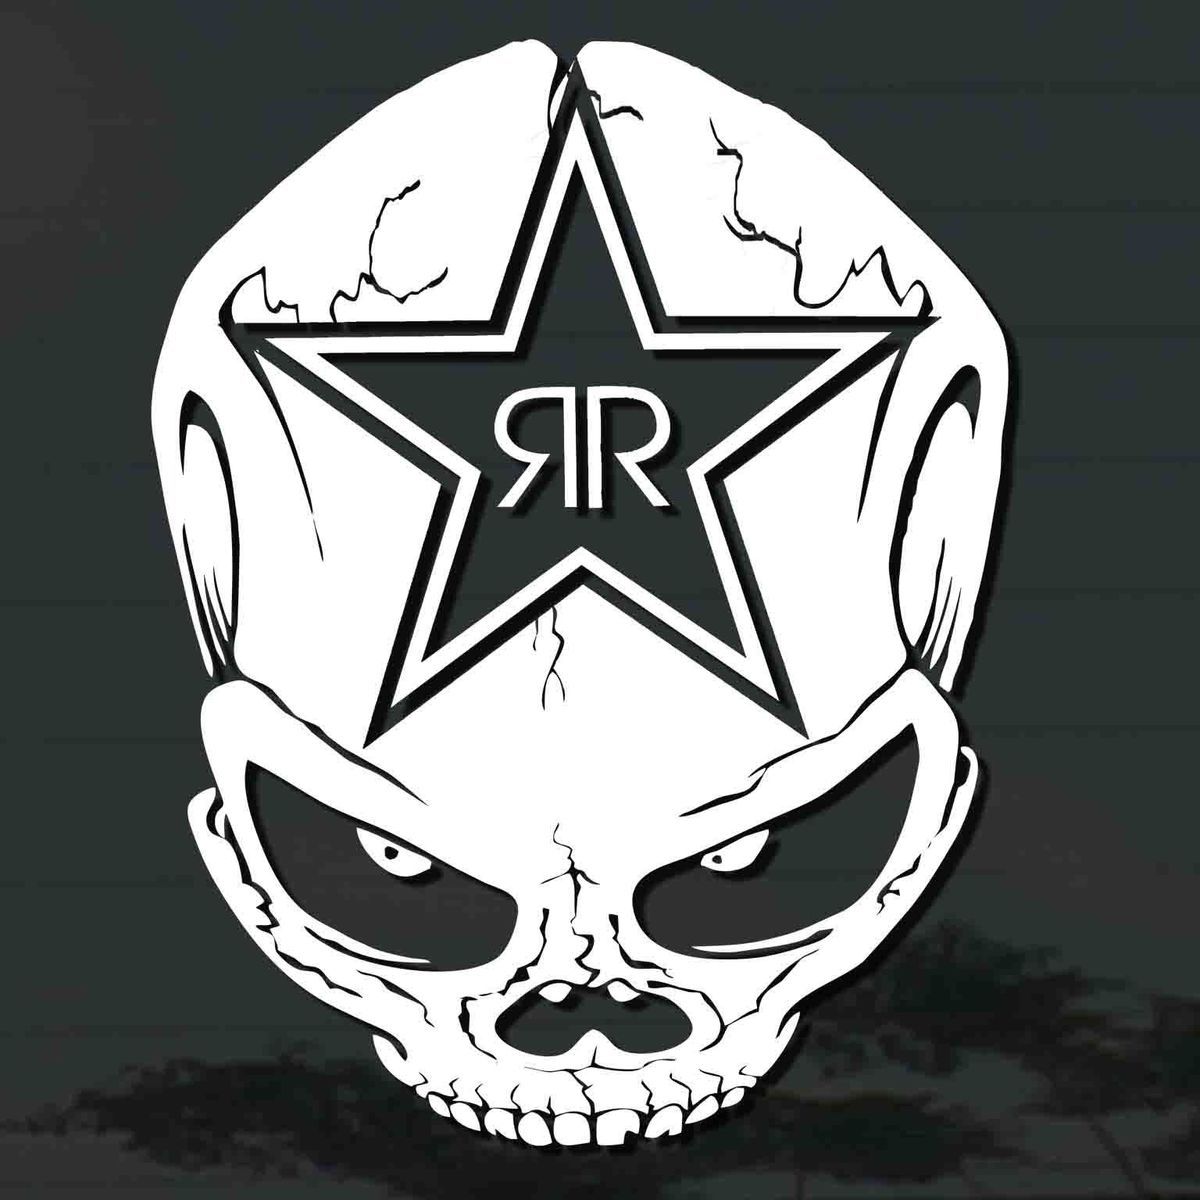 X1P Rockstar Energy Drink Skull Head Sticker Cut Out Truck Car